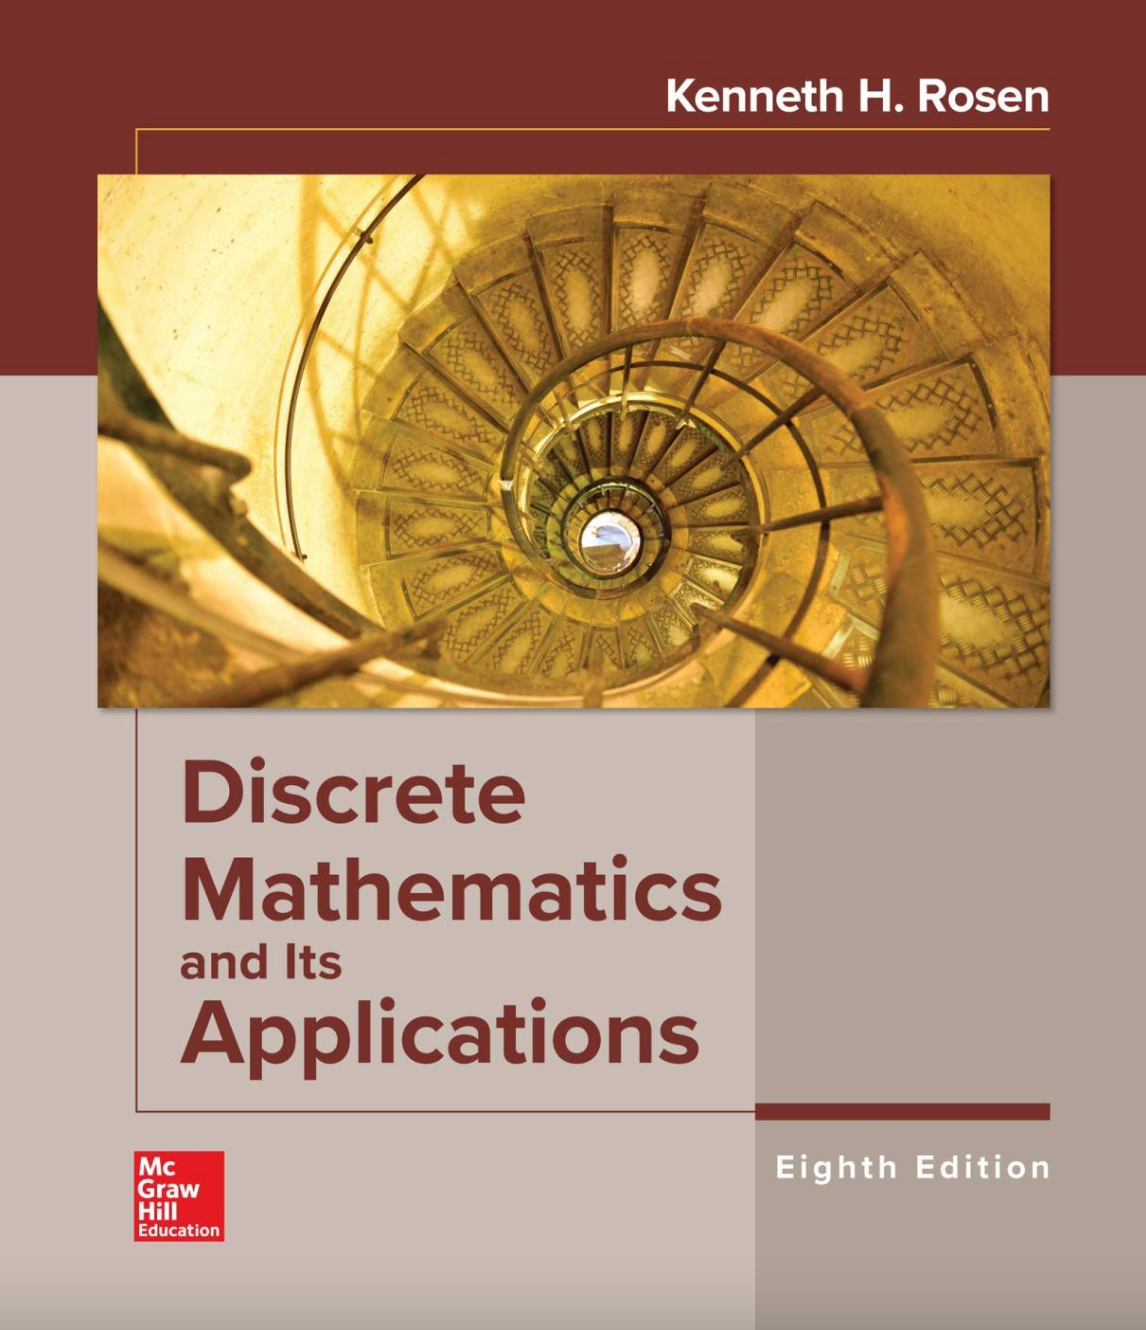 Discrete Mathematics and its Applications 8th